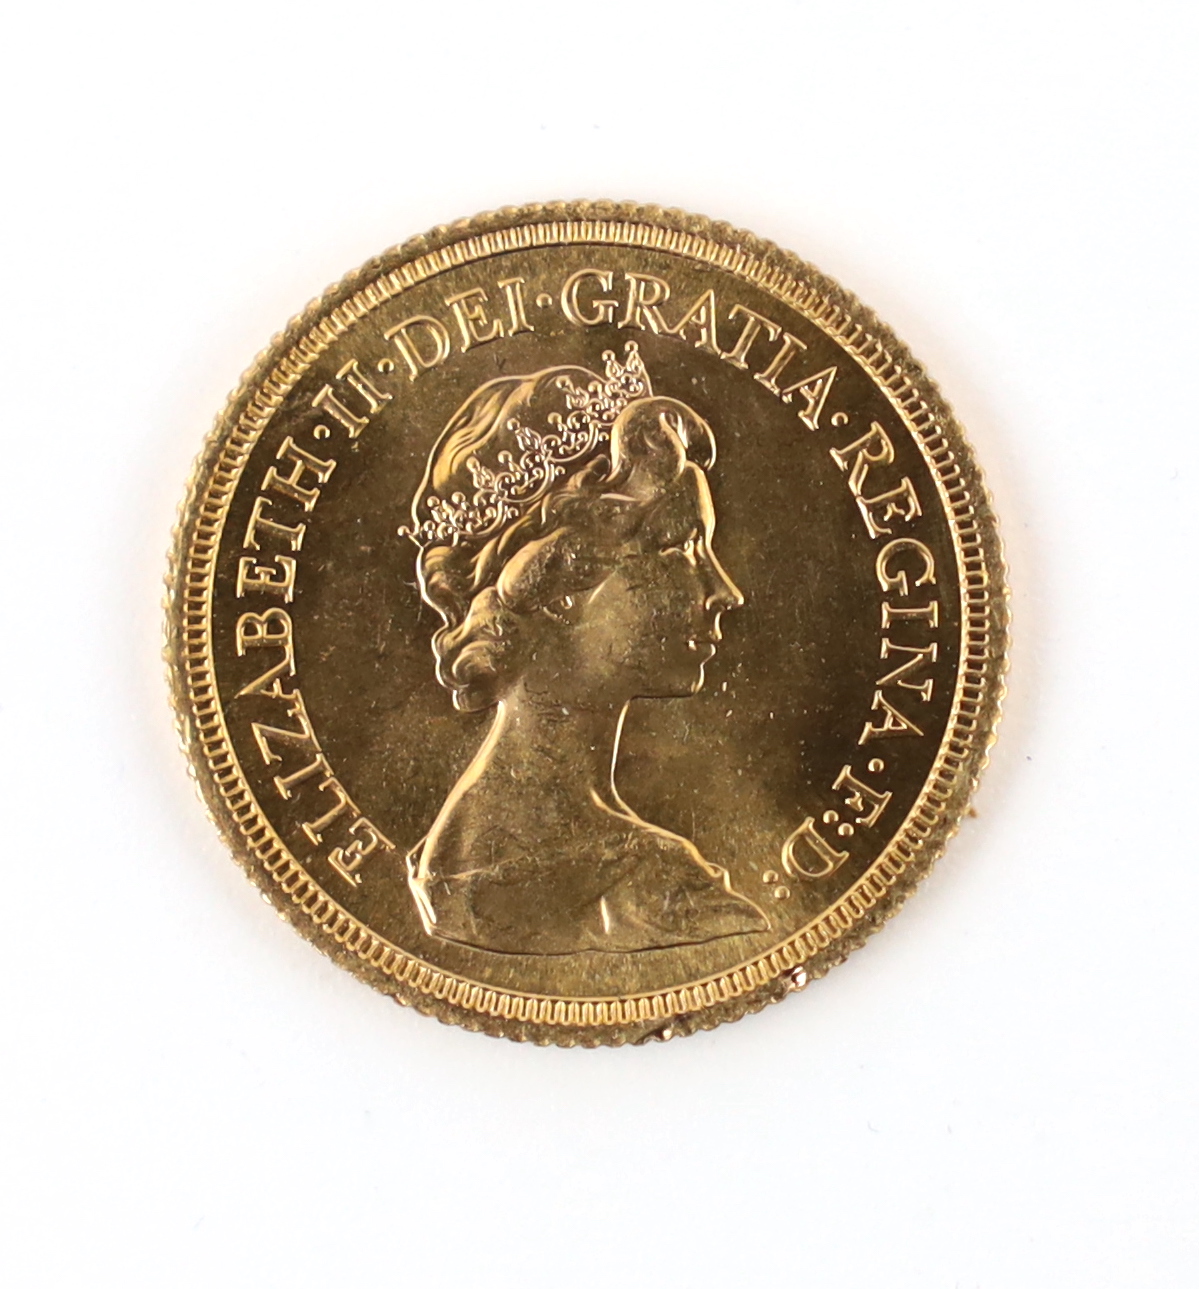 British Gold Coins, Elizabeth II sovereign, 1979, edge nicks otherwise about UNC (S4204)